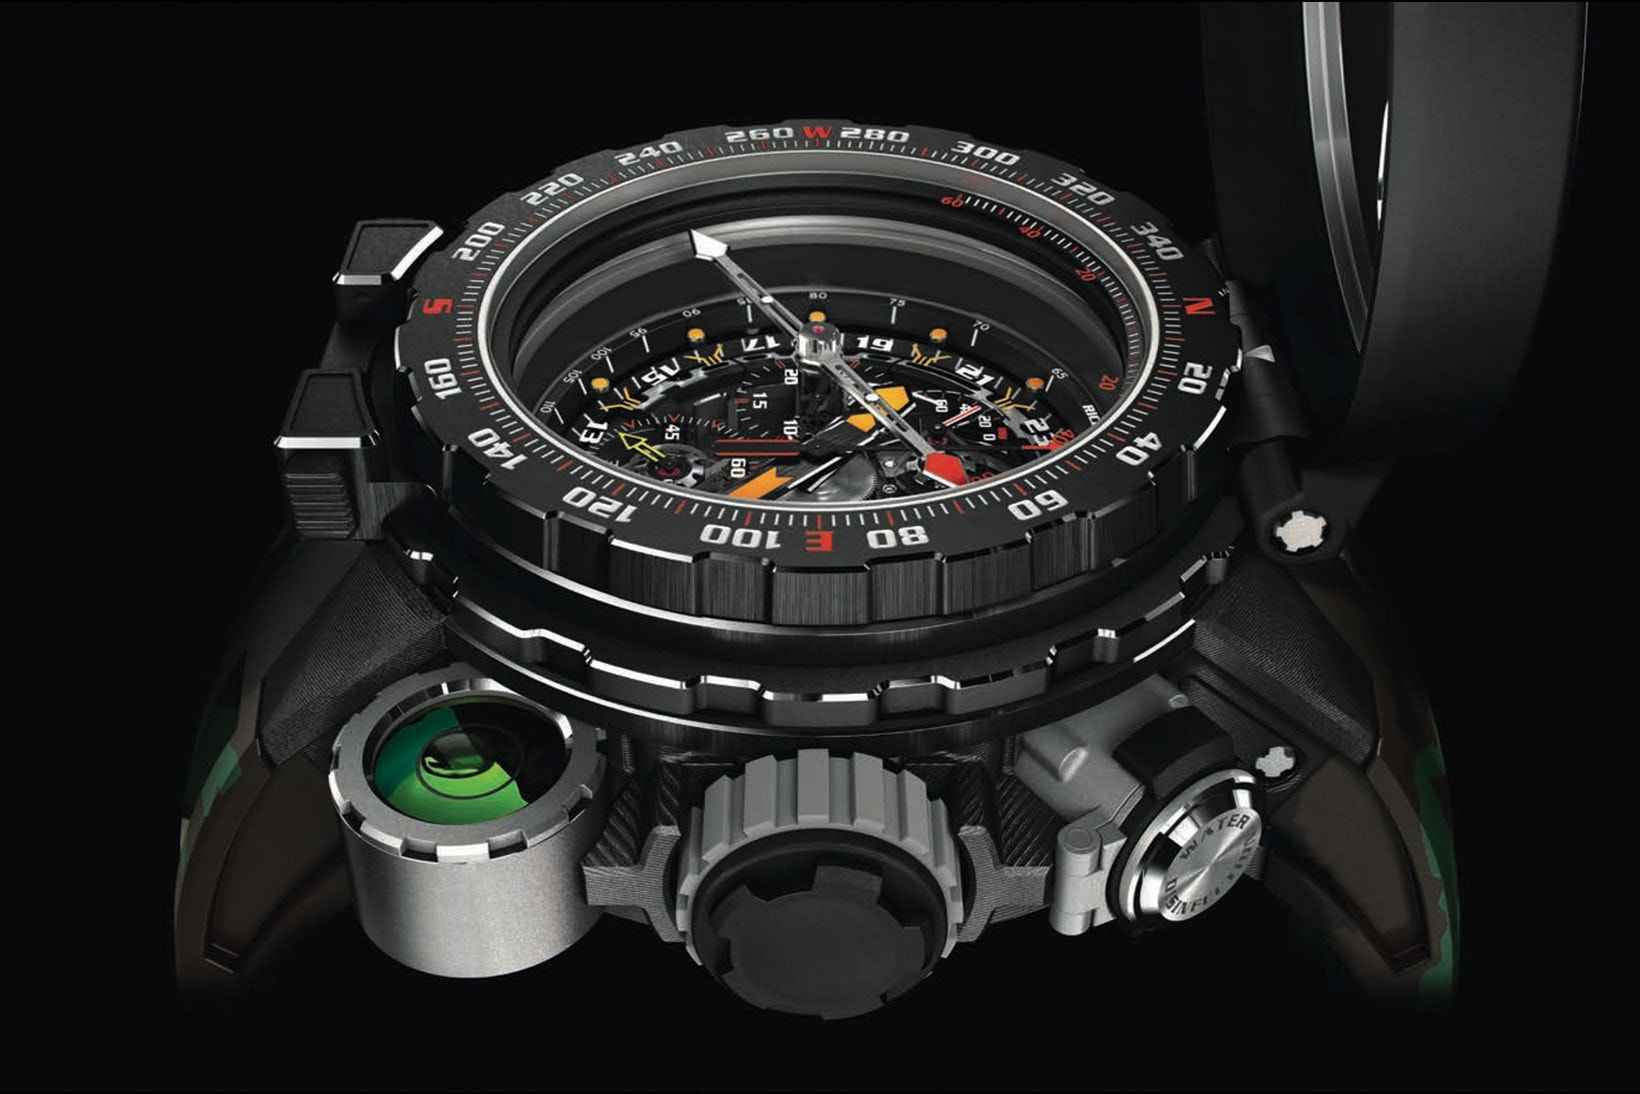 Richard Mille RM 25 01 Tourbillon Adventure expensive watch luxury swiss watch Sylvester Stallone time piece handmade